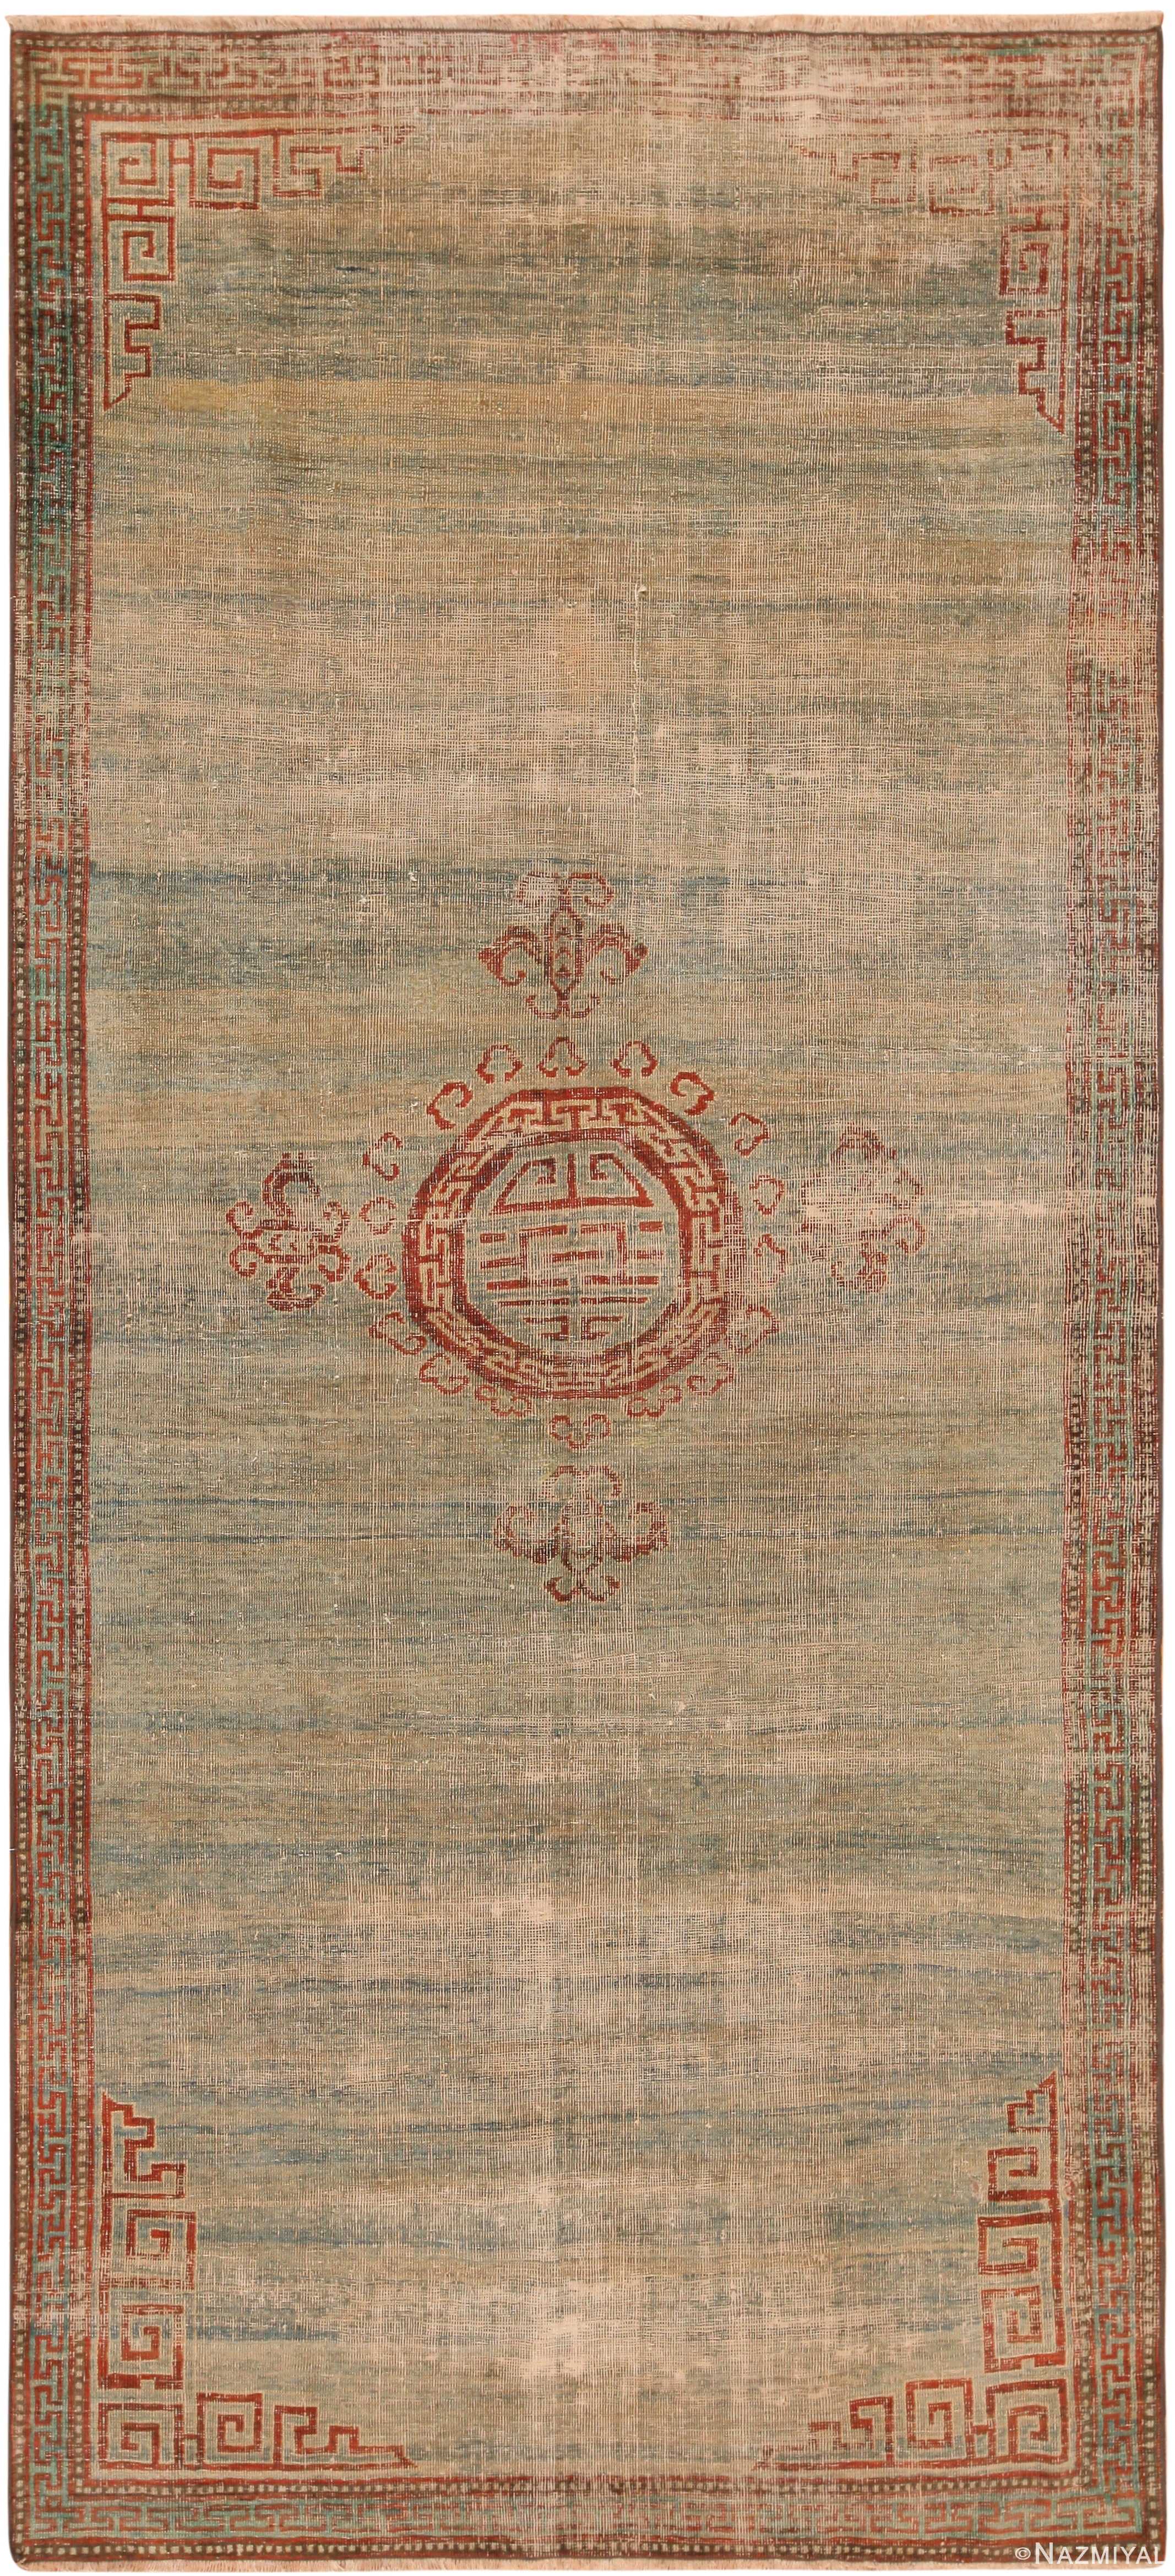 Silk Antique East Turkestan Khotan Rug 49945 by Nazmiyal Antique Rugs